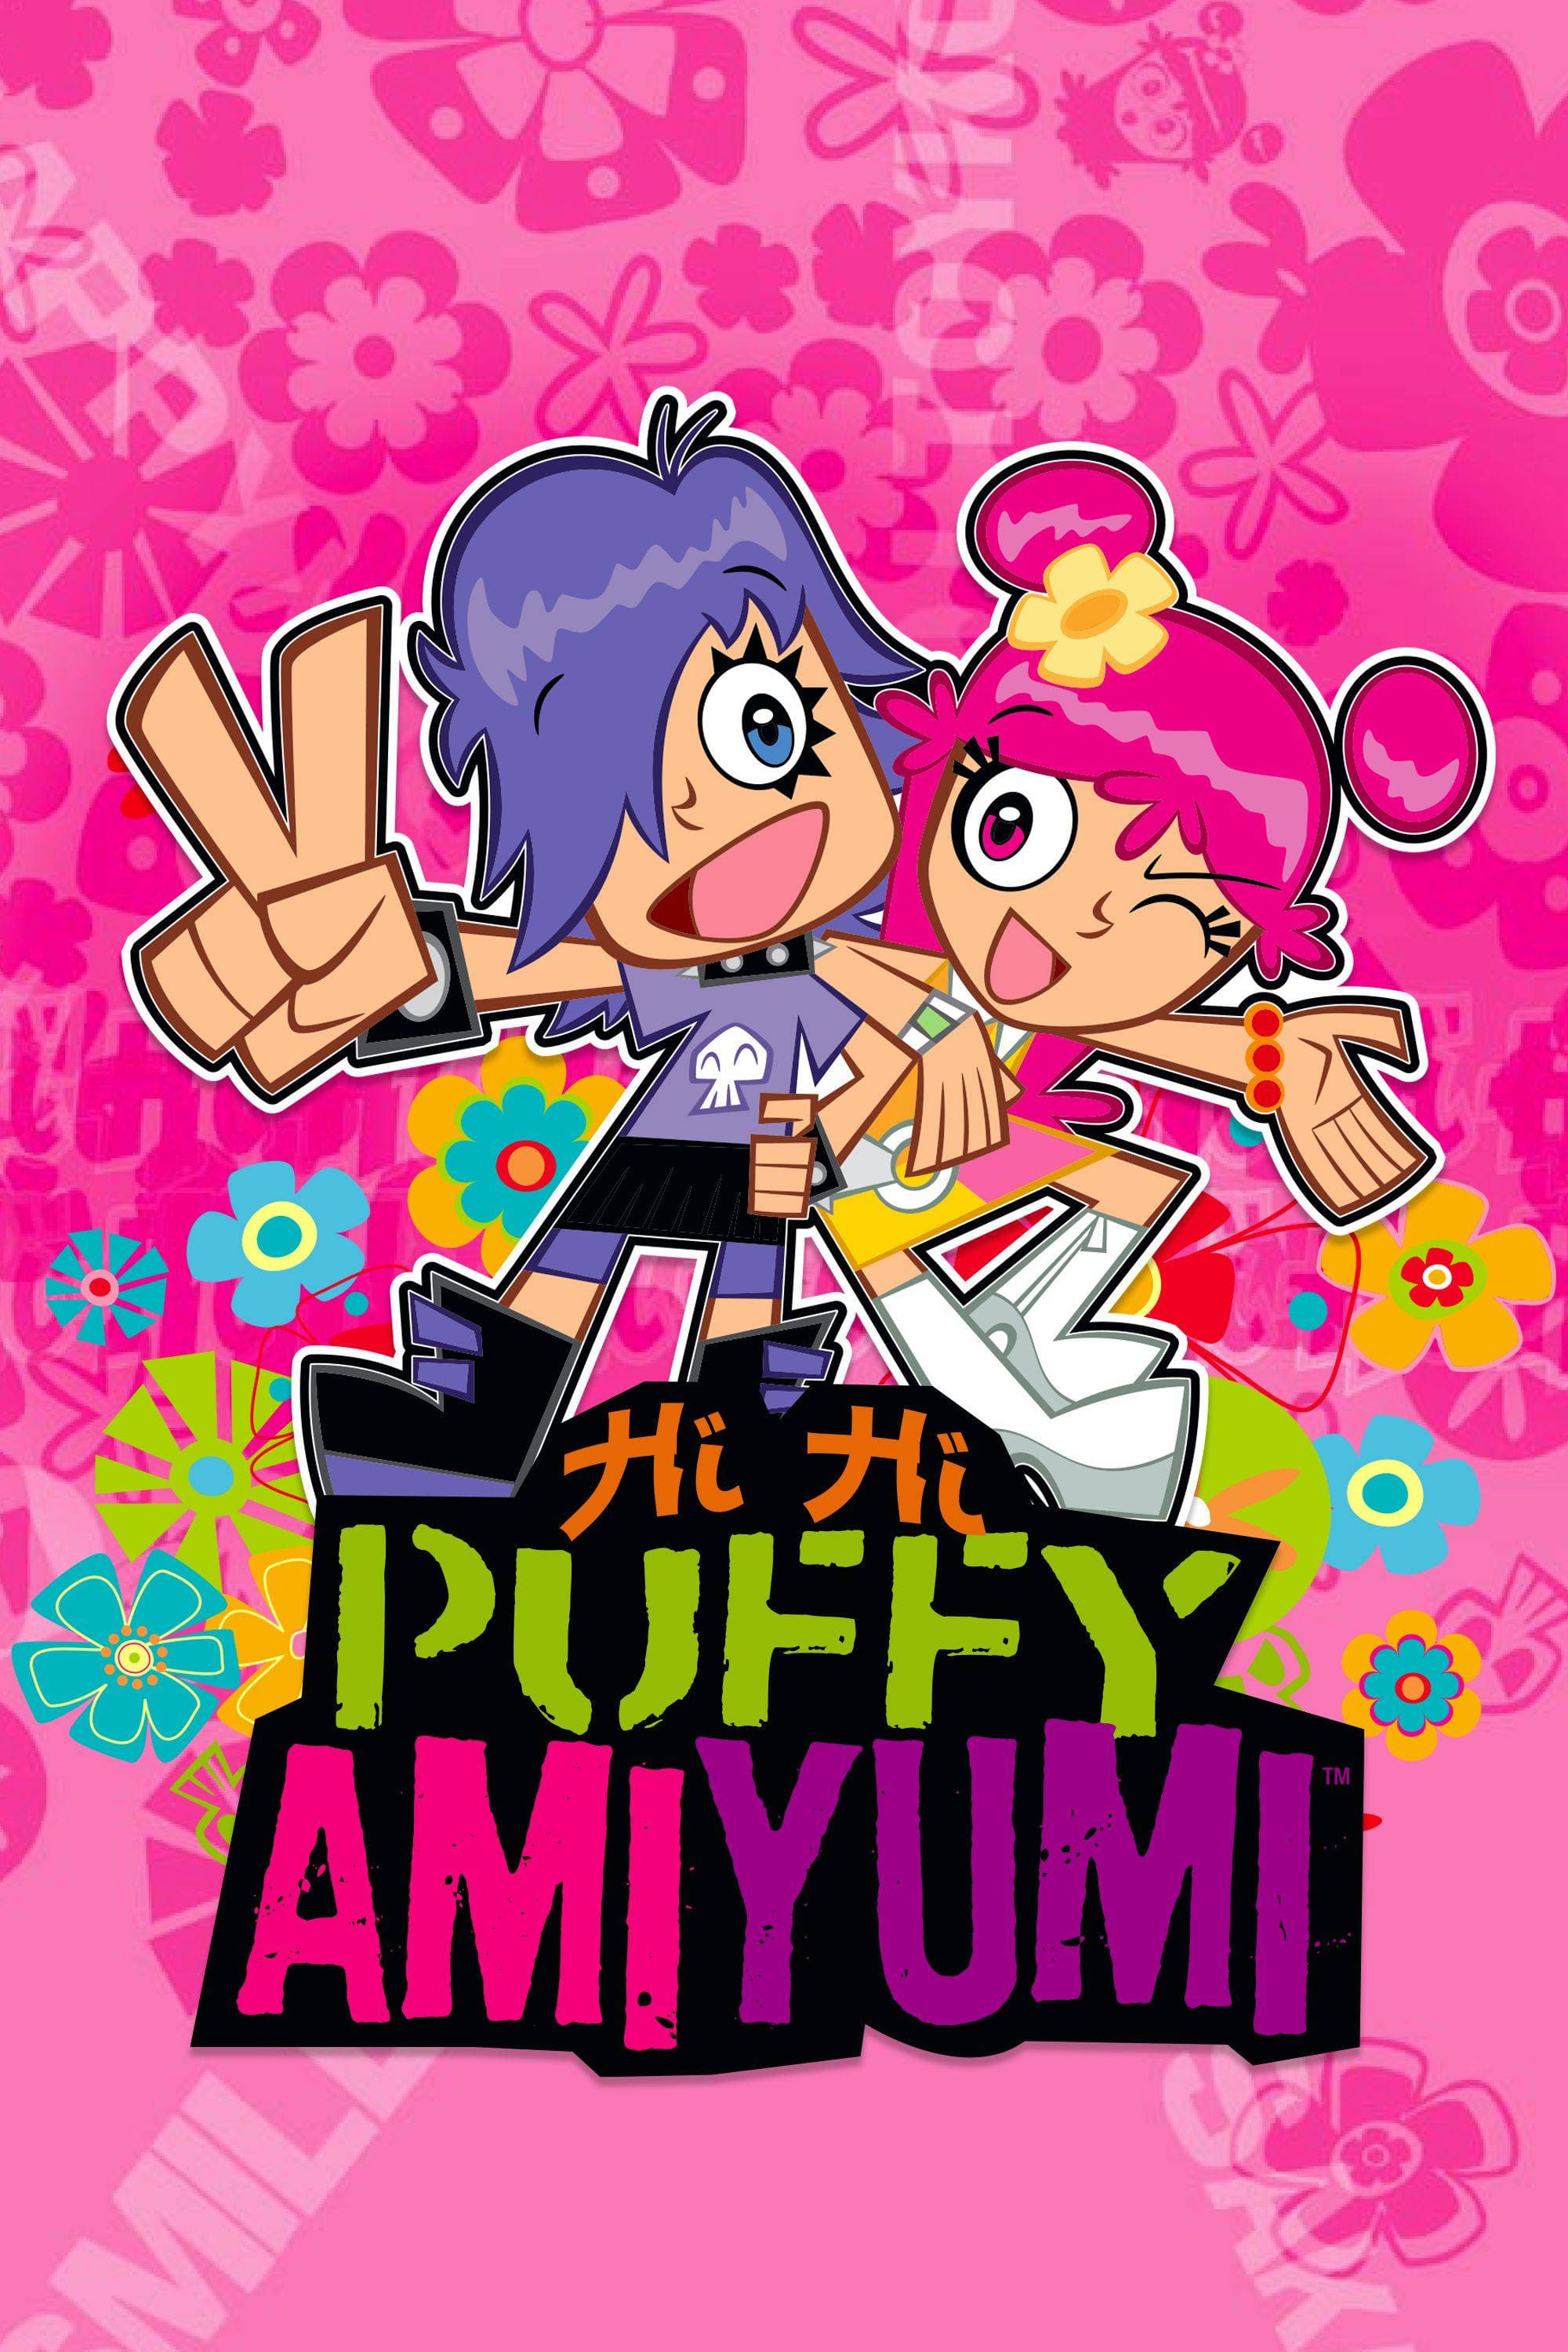 Hi Hi Puffy AmiYumi (U.S. TV) - Anime News Network